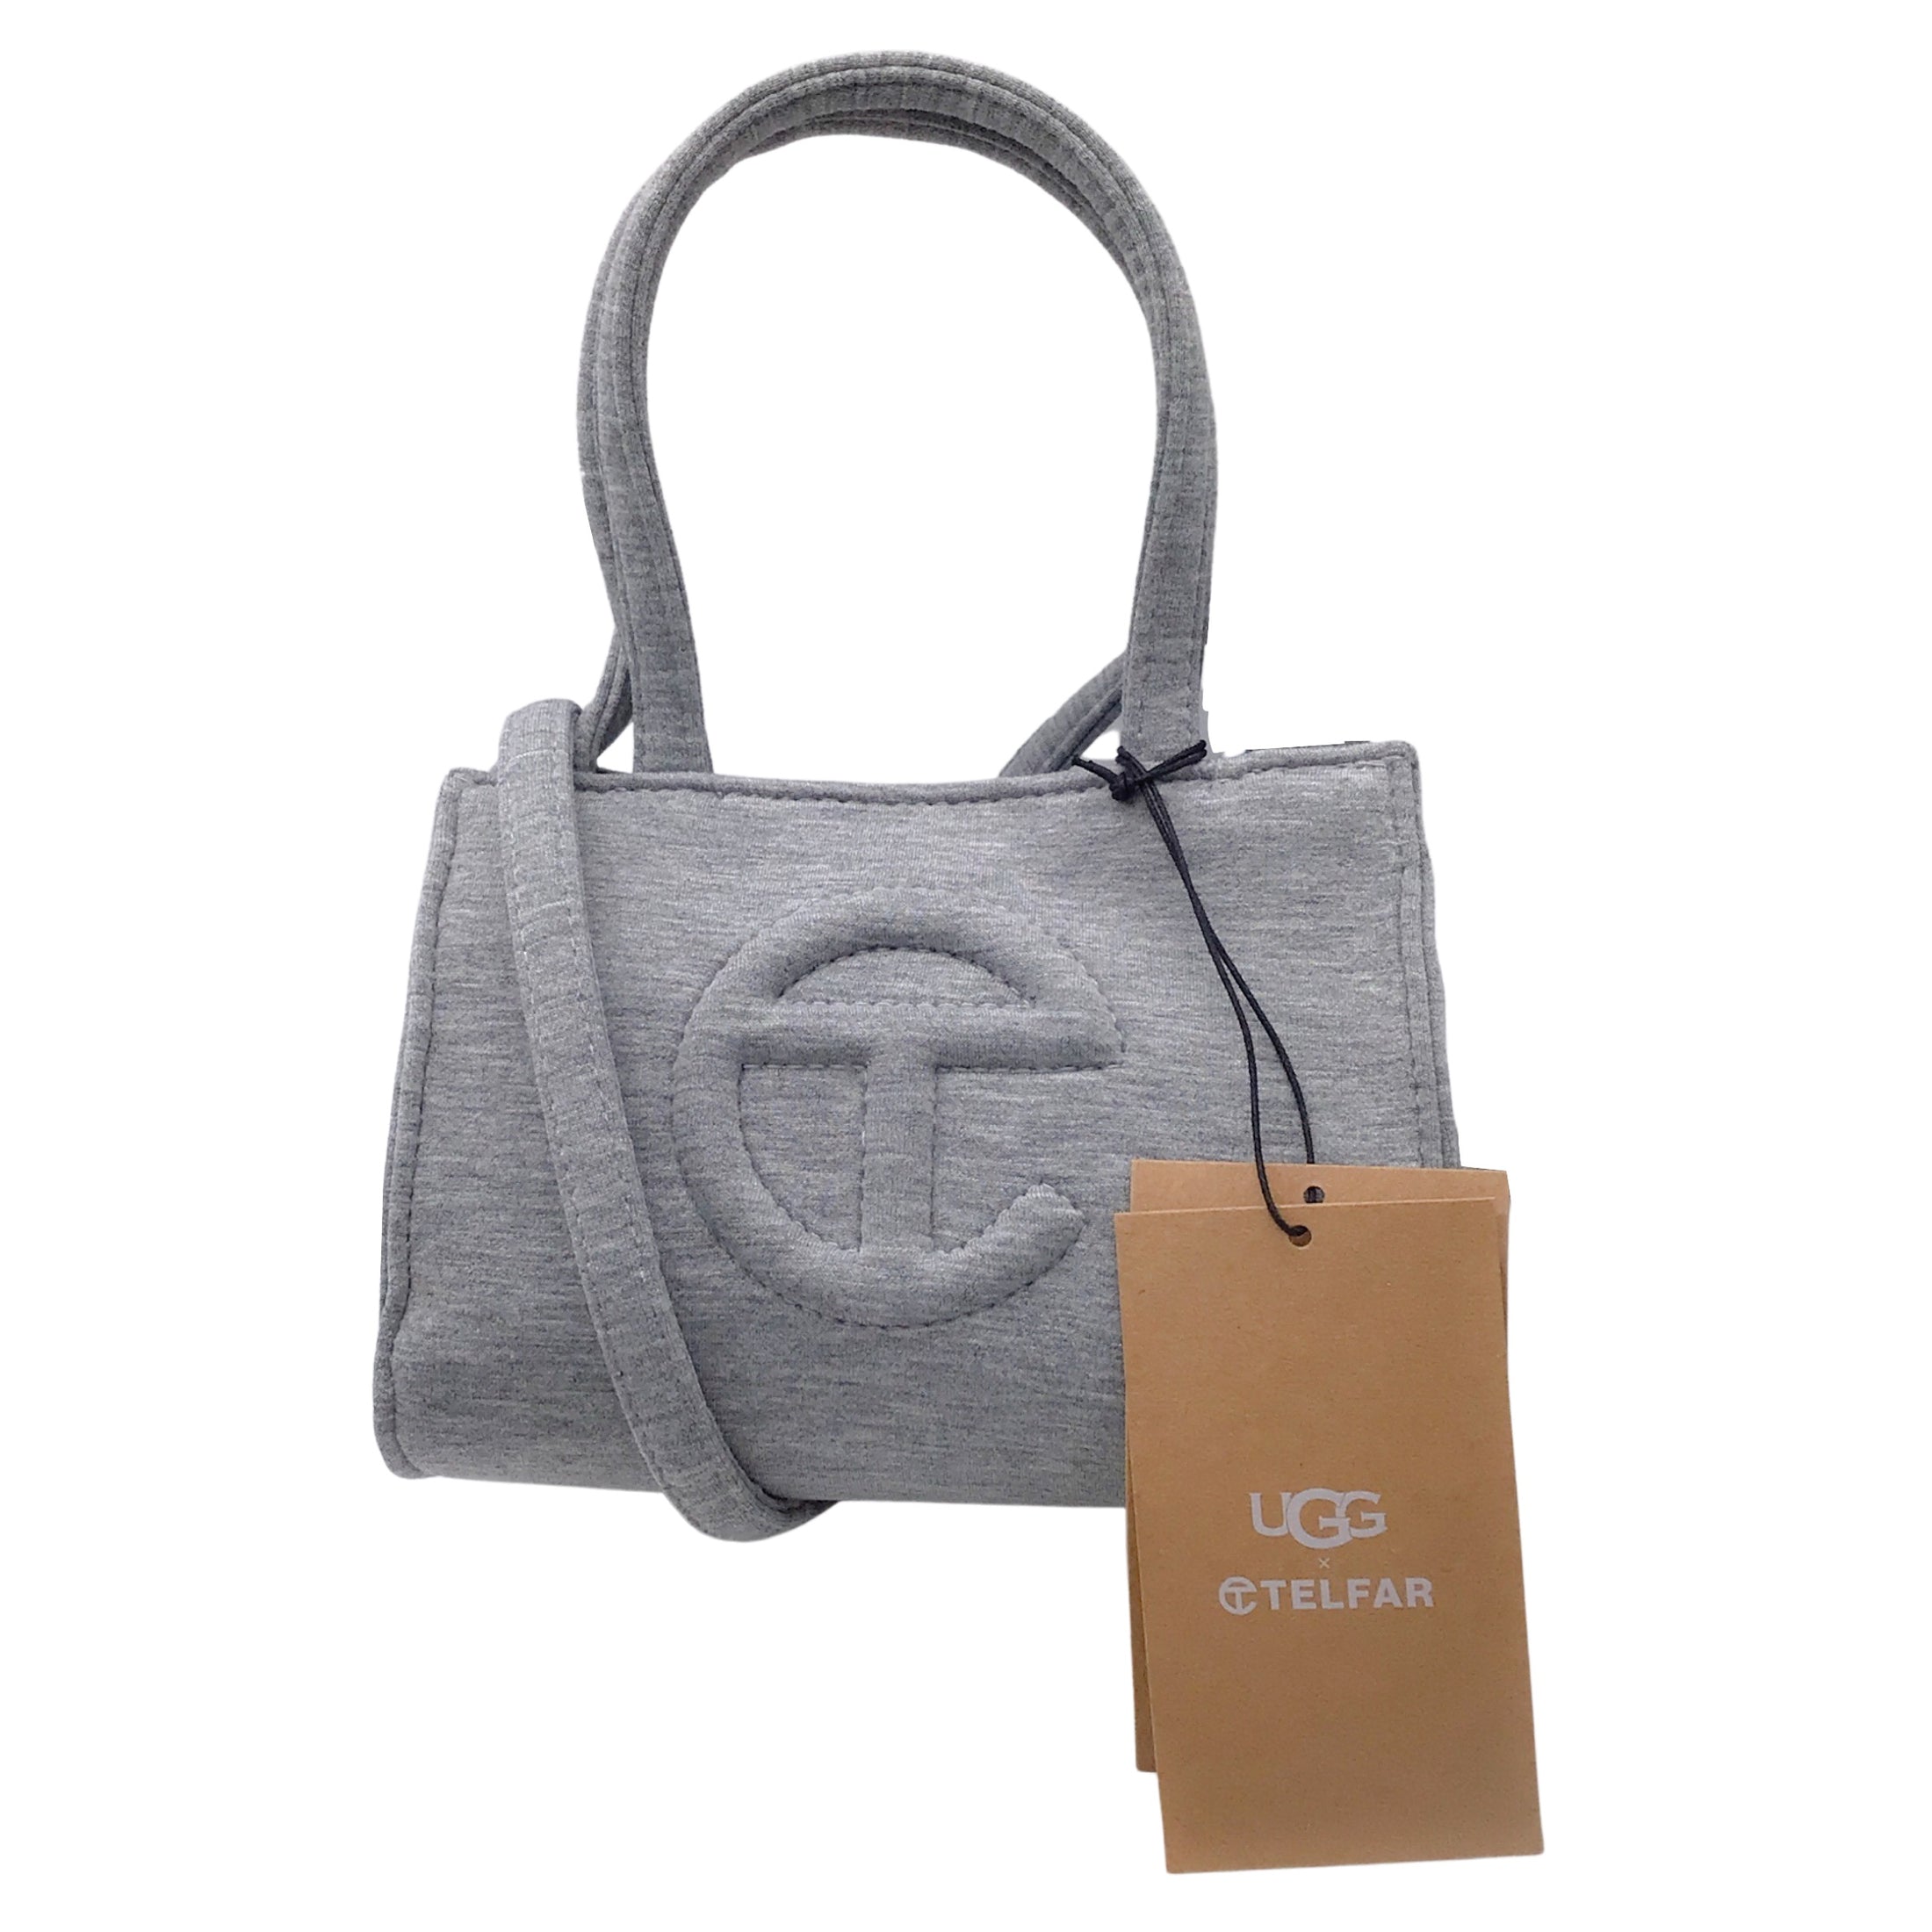 UGG x TELFAR Fleece Small Shopping Bag in Heather Grey